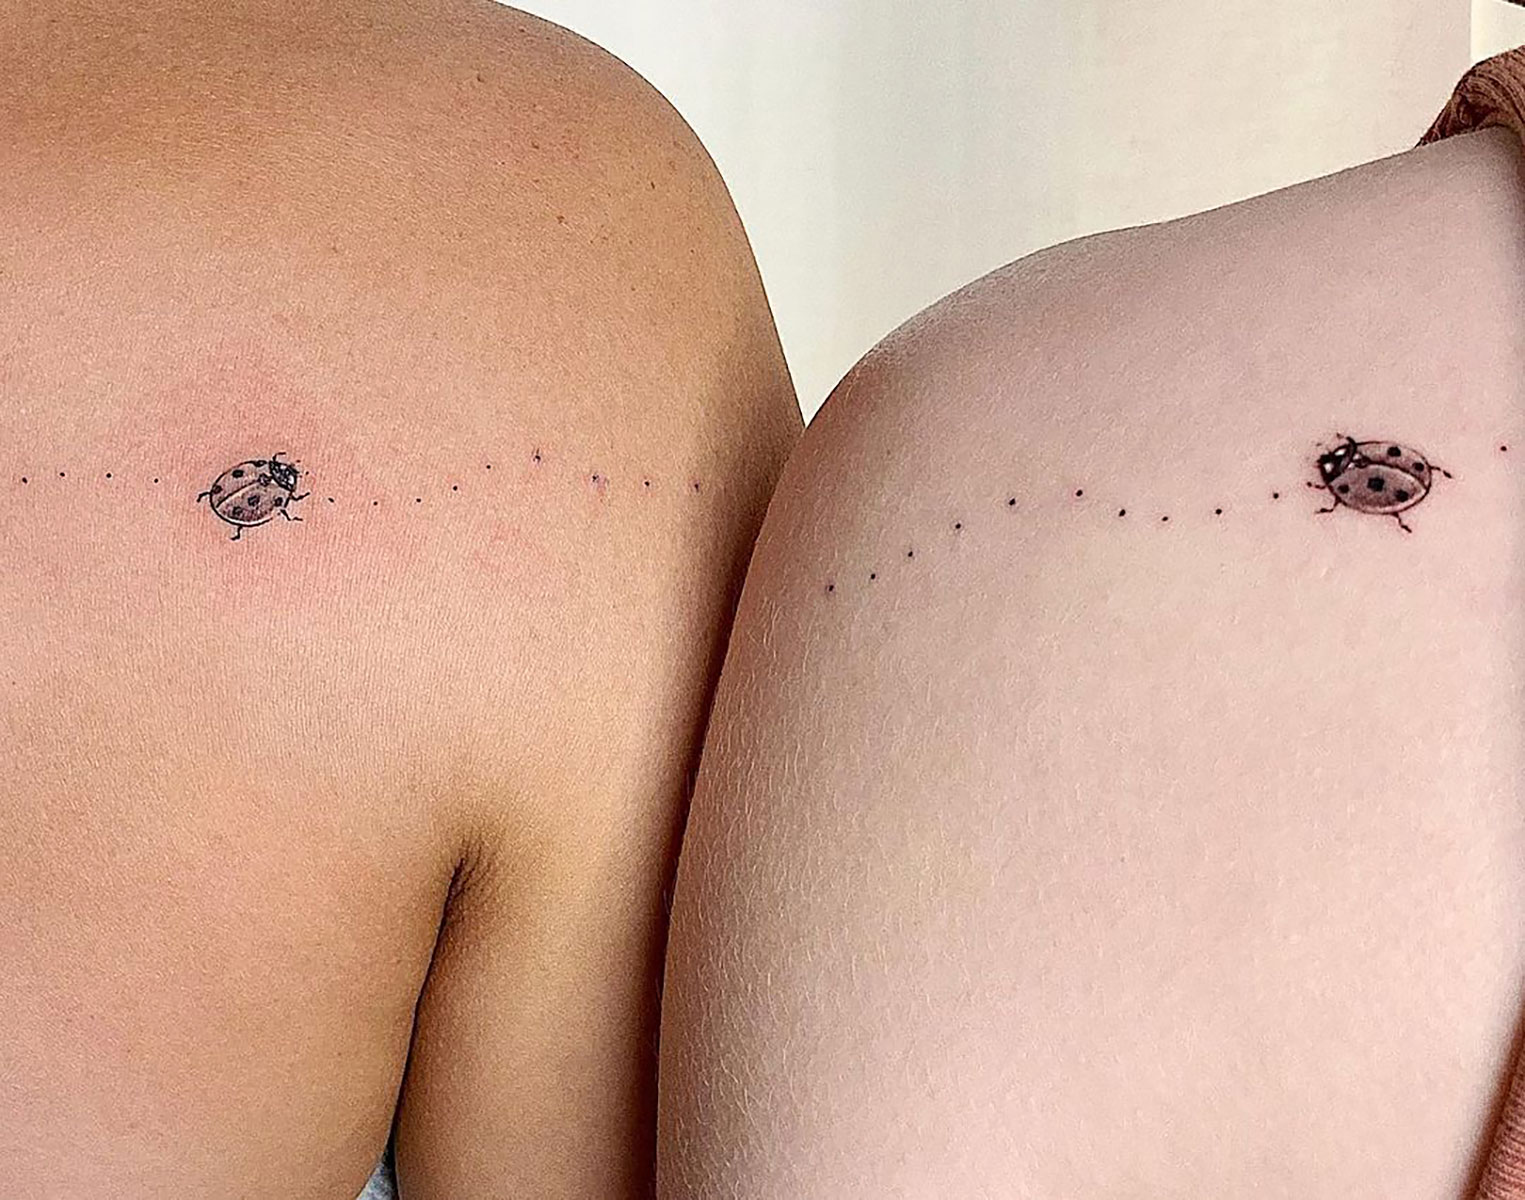 40 Adorable Sisters Forever Tattoo Design Ideas - Bored Art